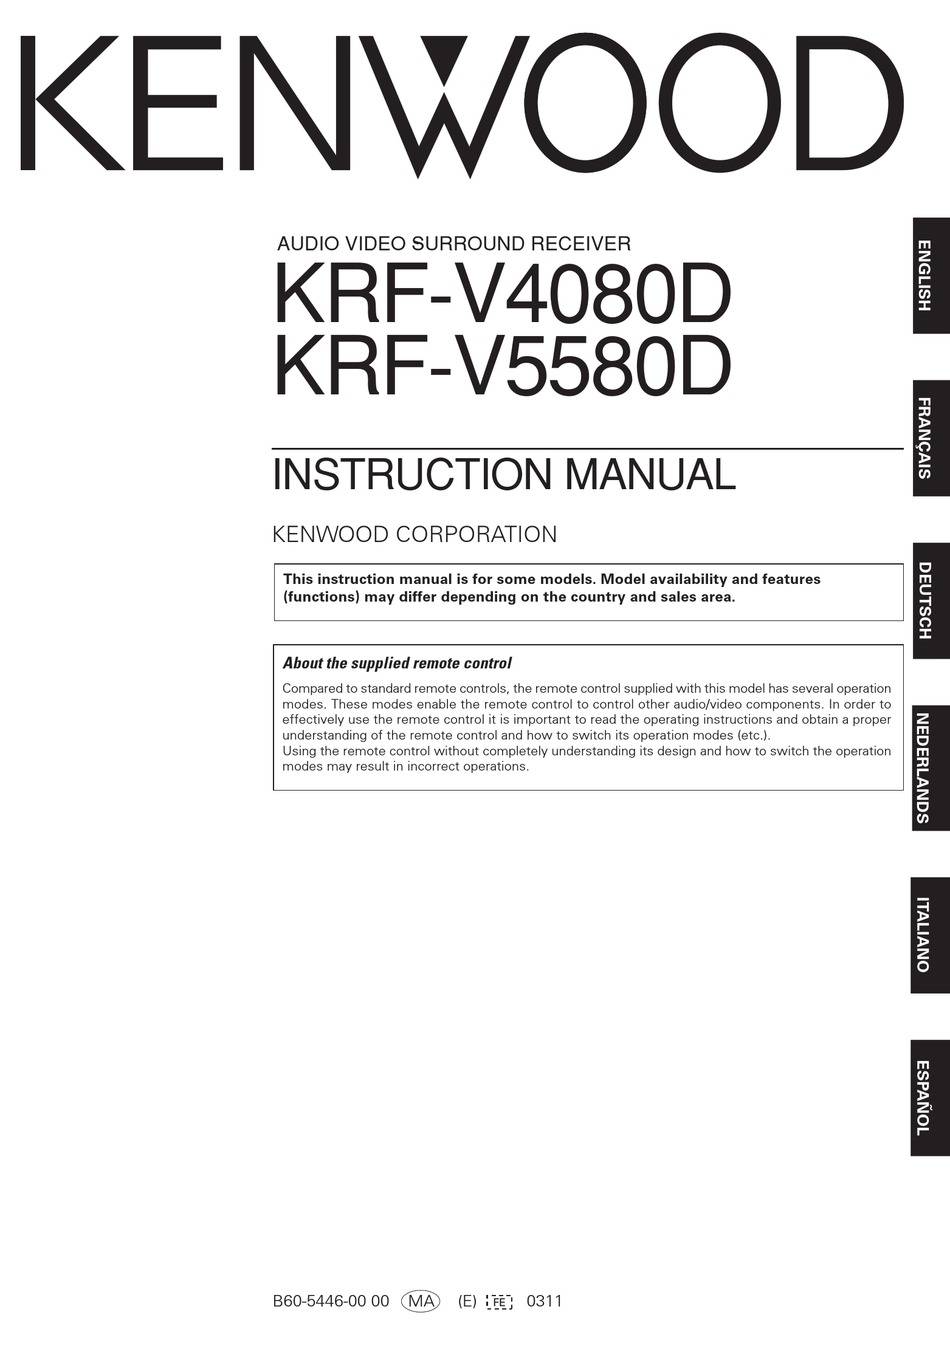 Kenwood KRF-V4080D